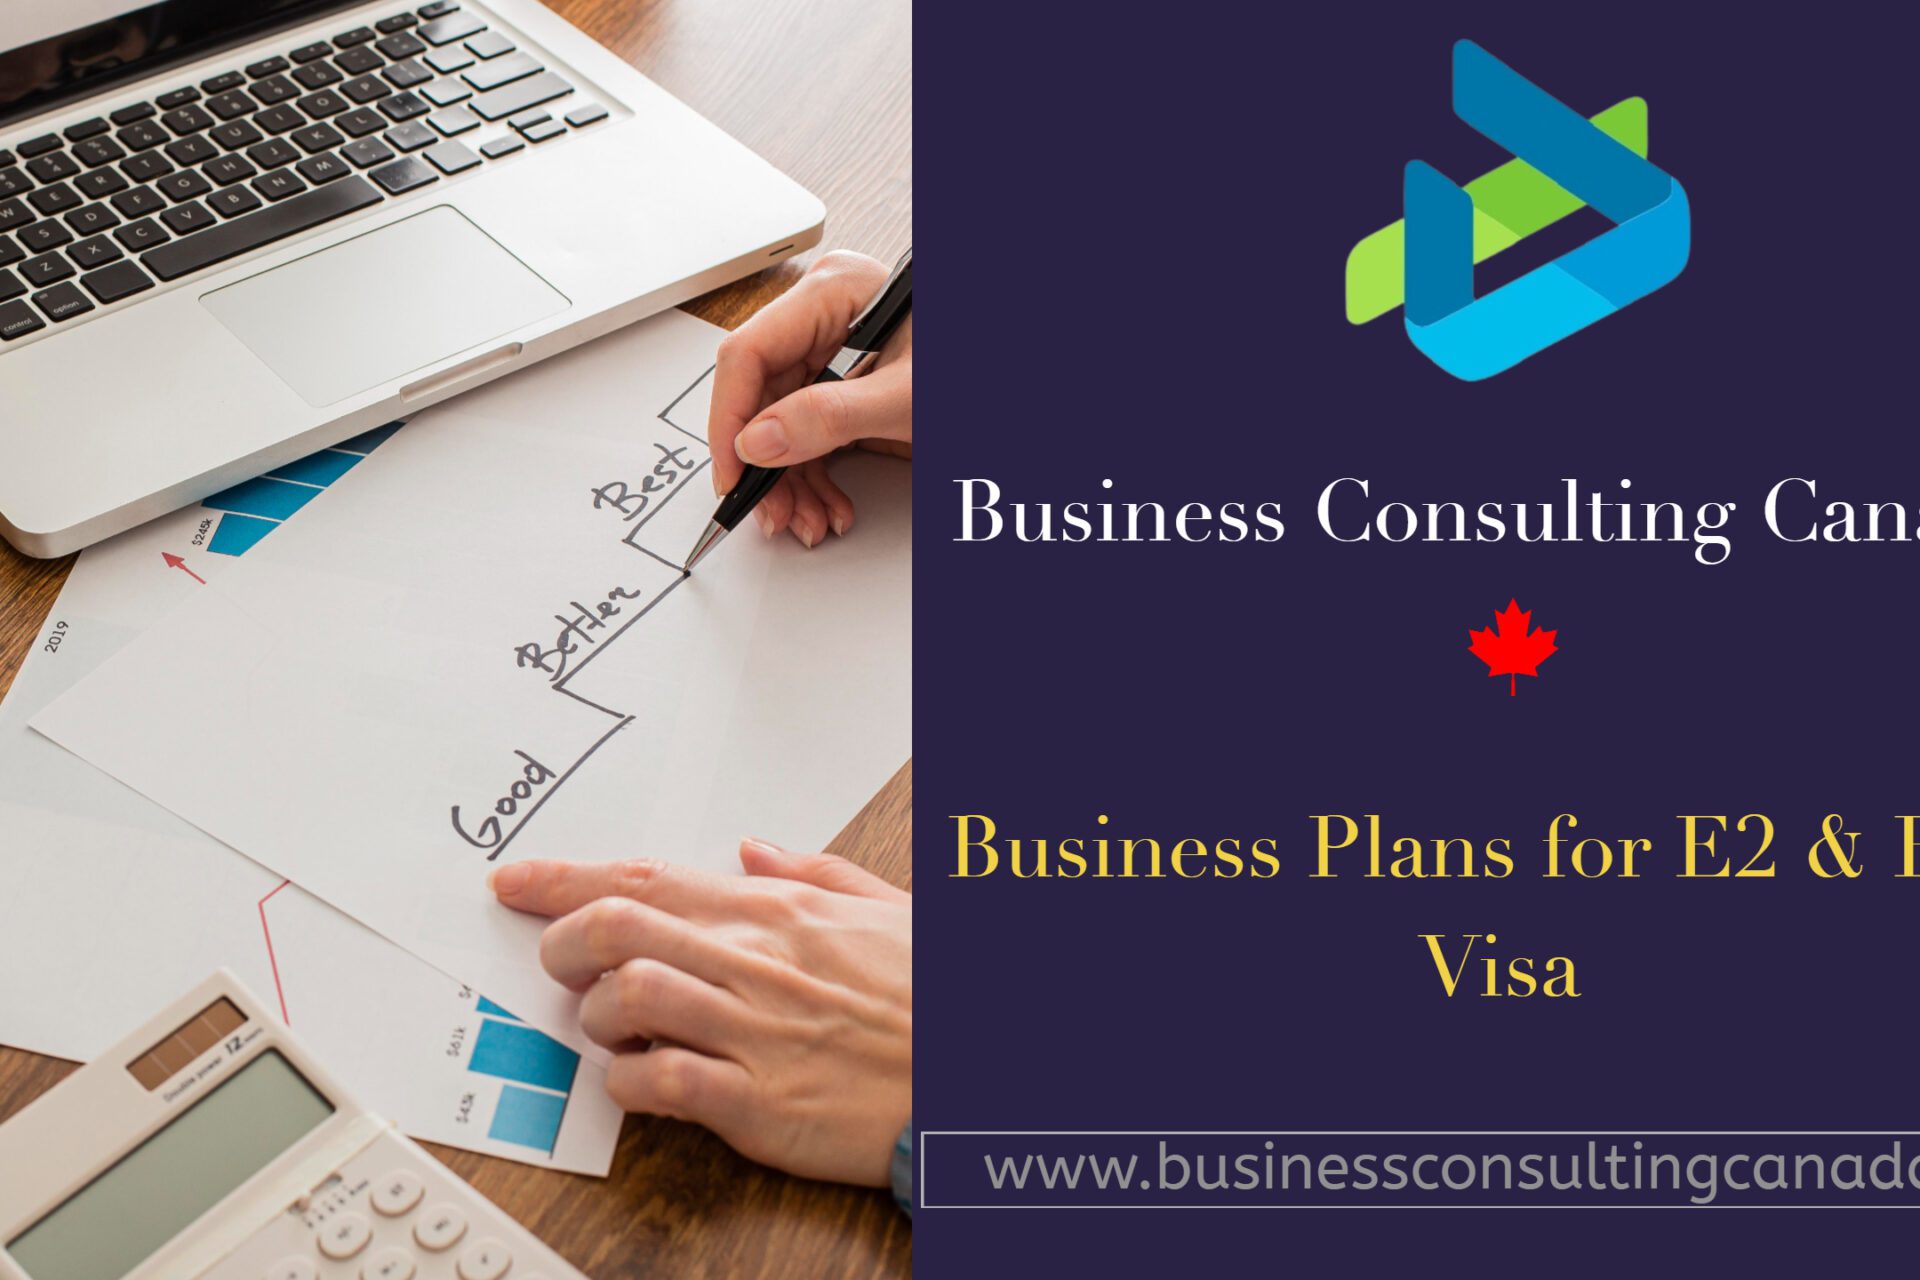 Comprehensive Guide to Business Plans for E2 & EB2 Visa Applications